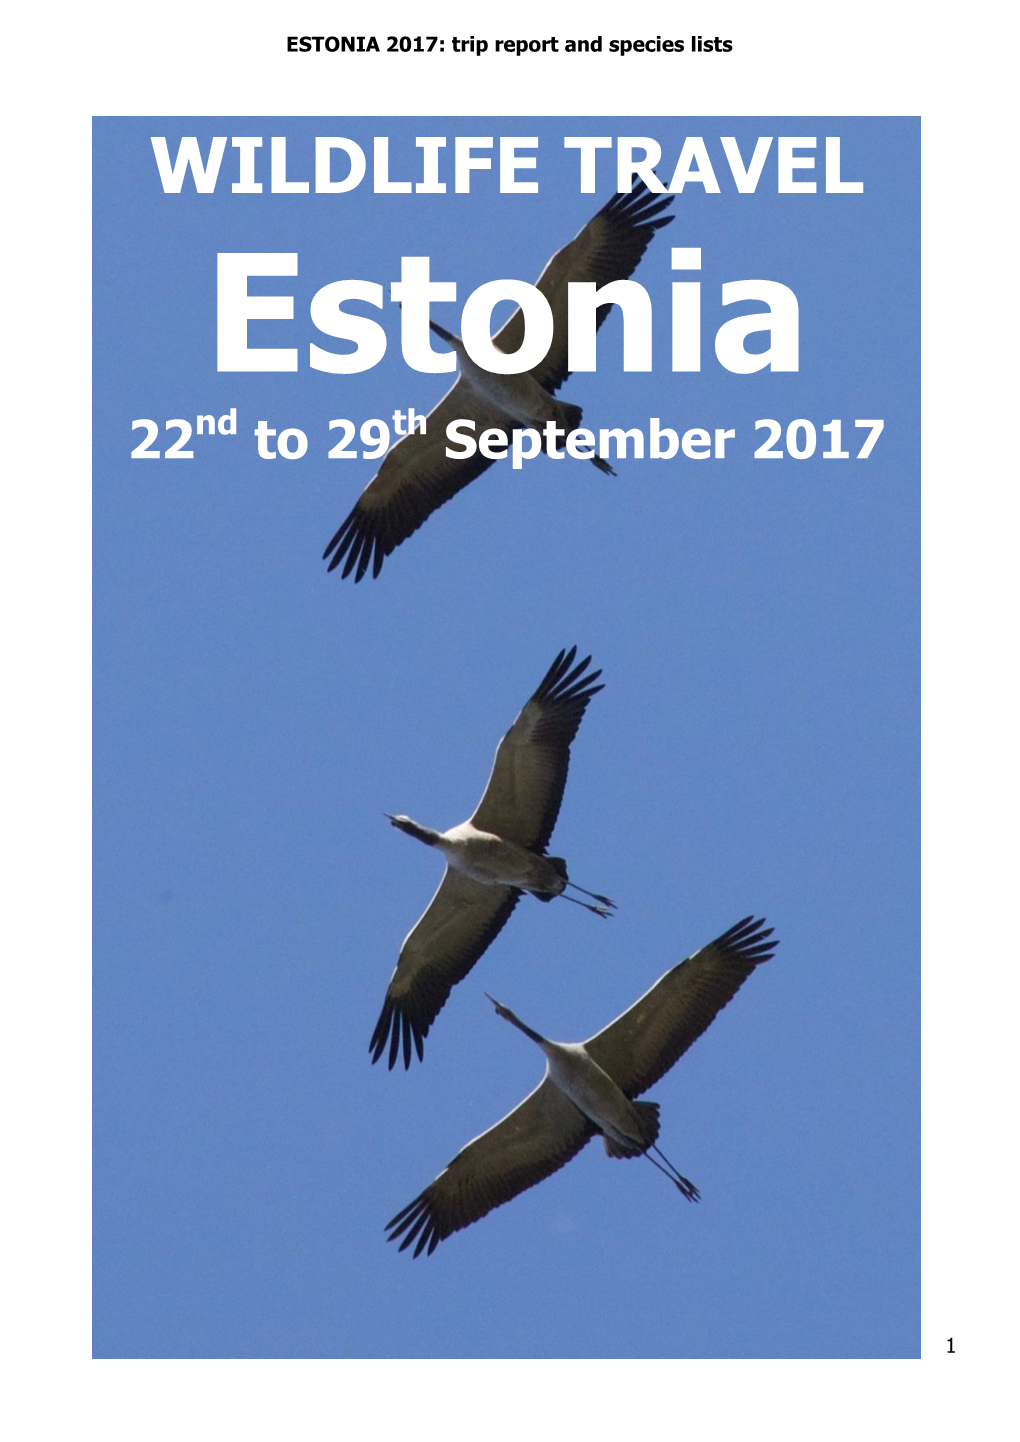 Wildlife Travel Estonia 2017